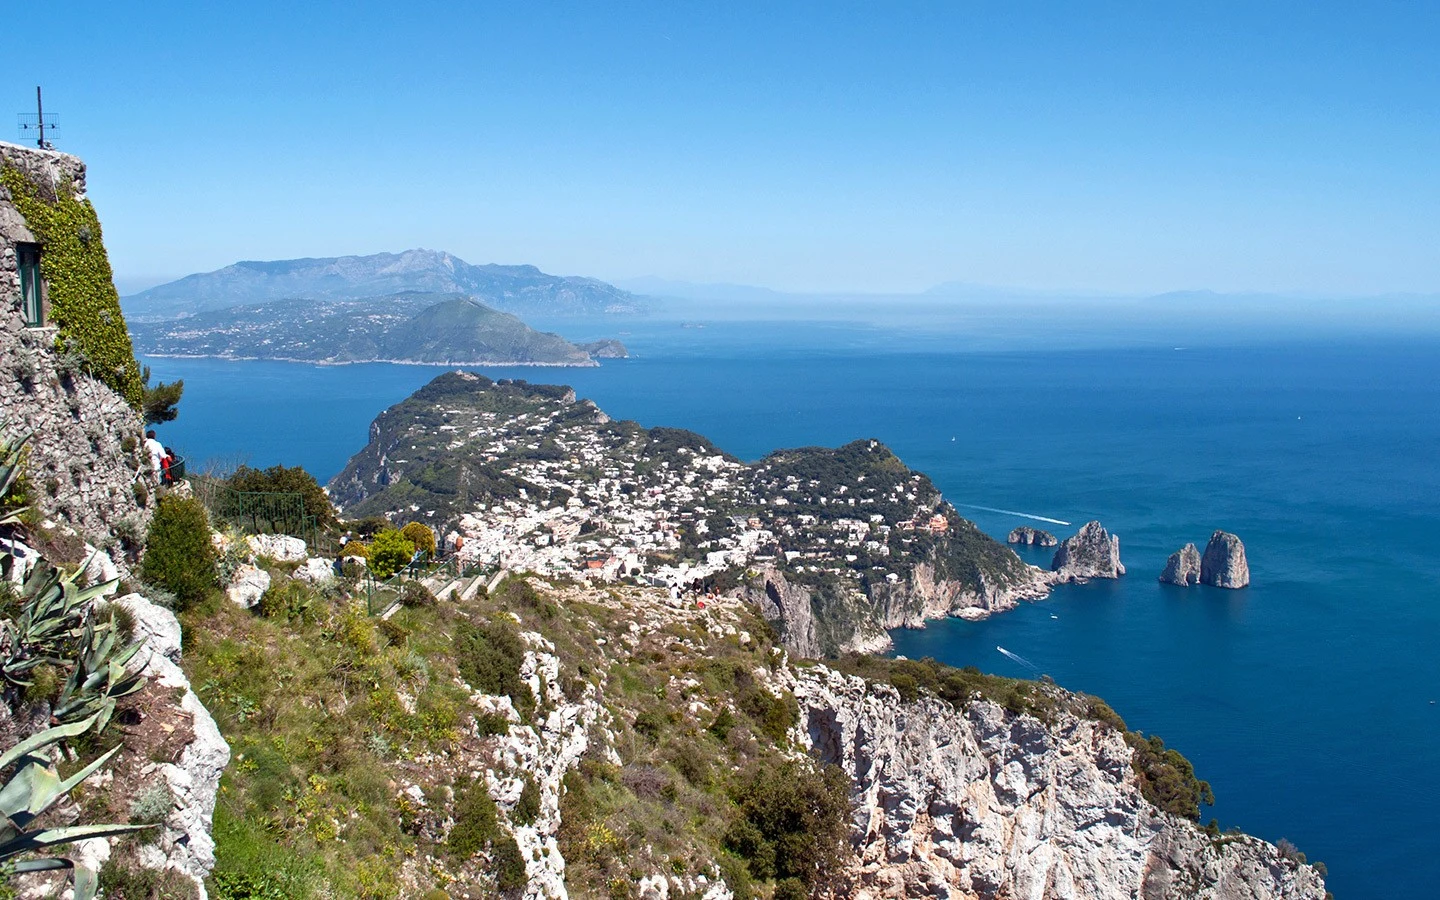 Views from Monte Solaro in Capri, Italy